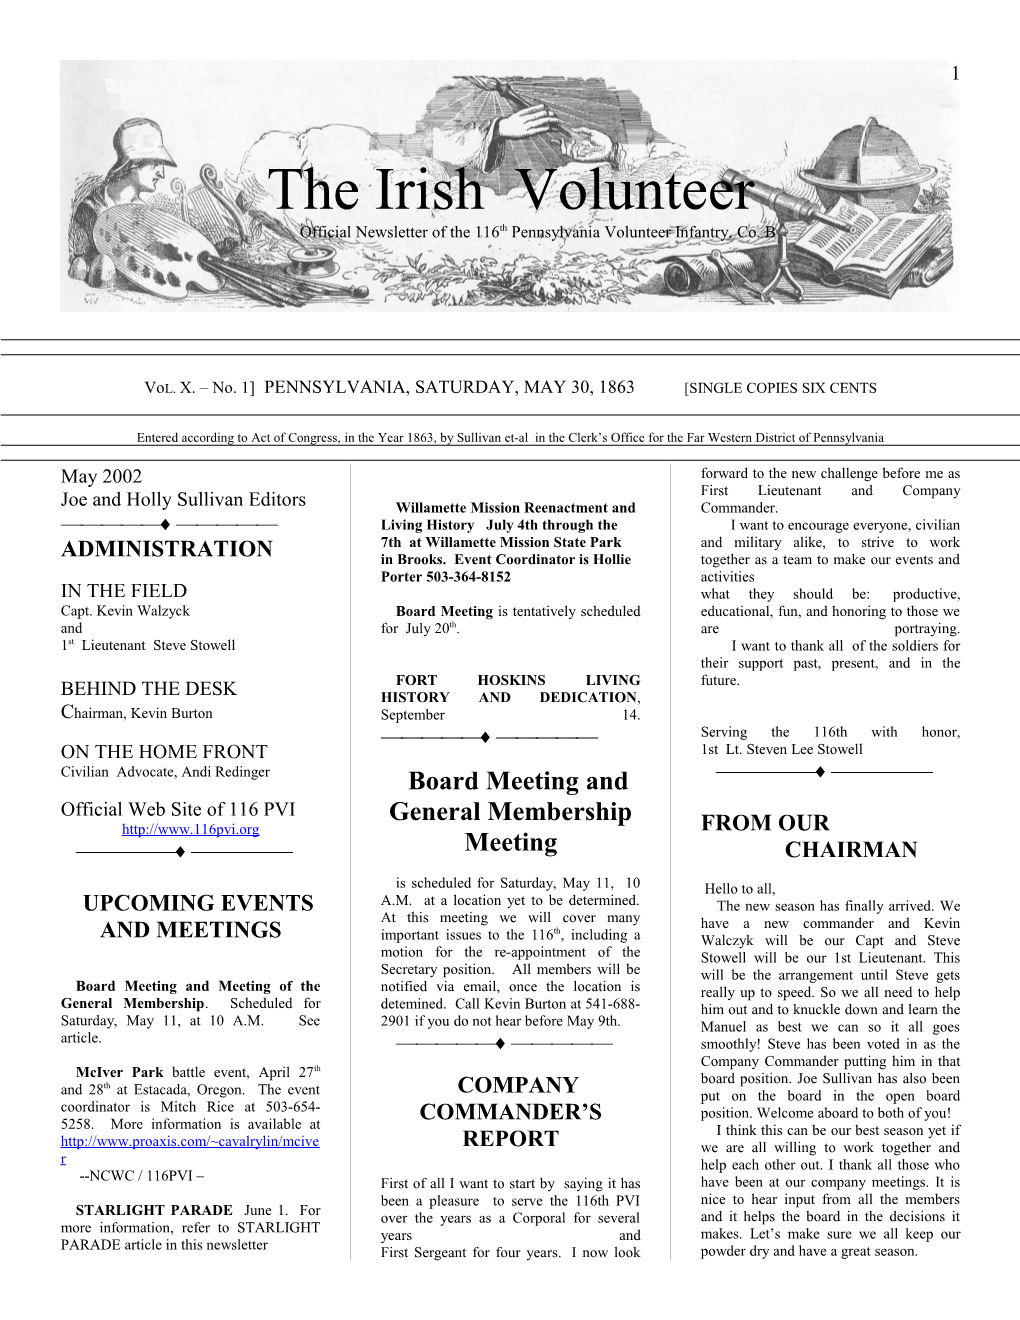 The Irish Volunteer